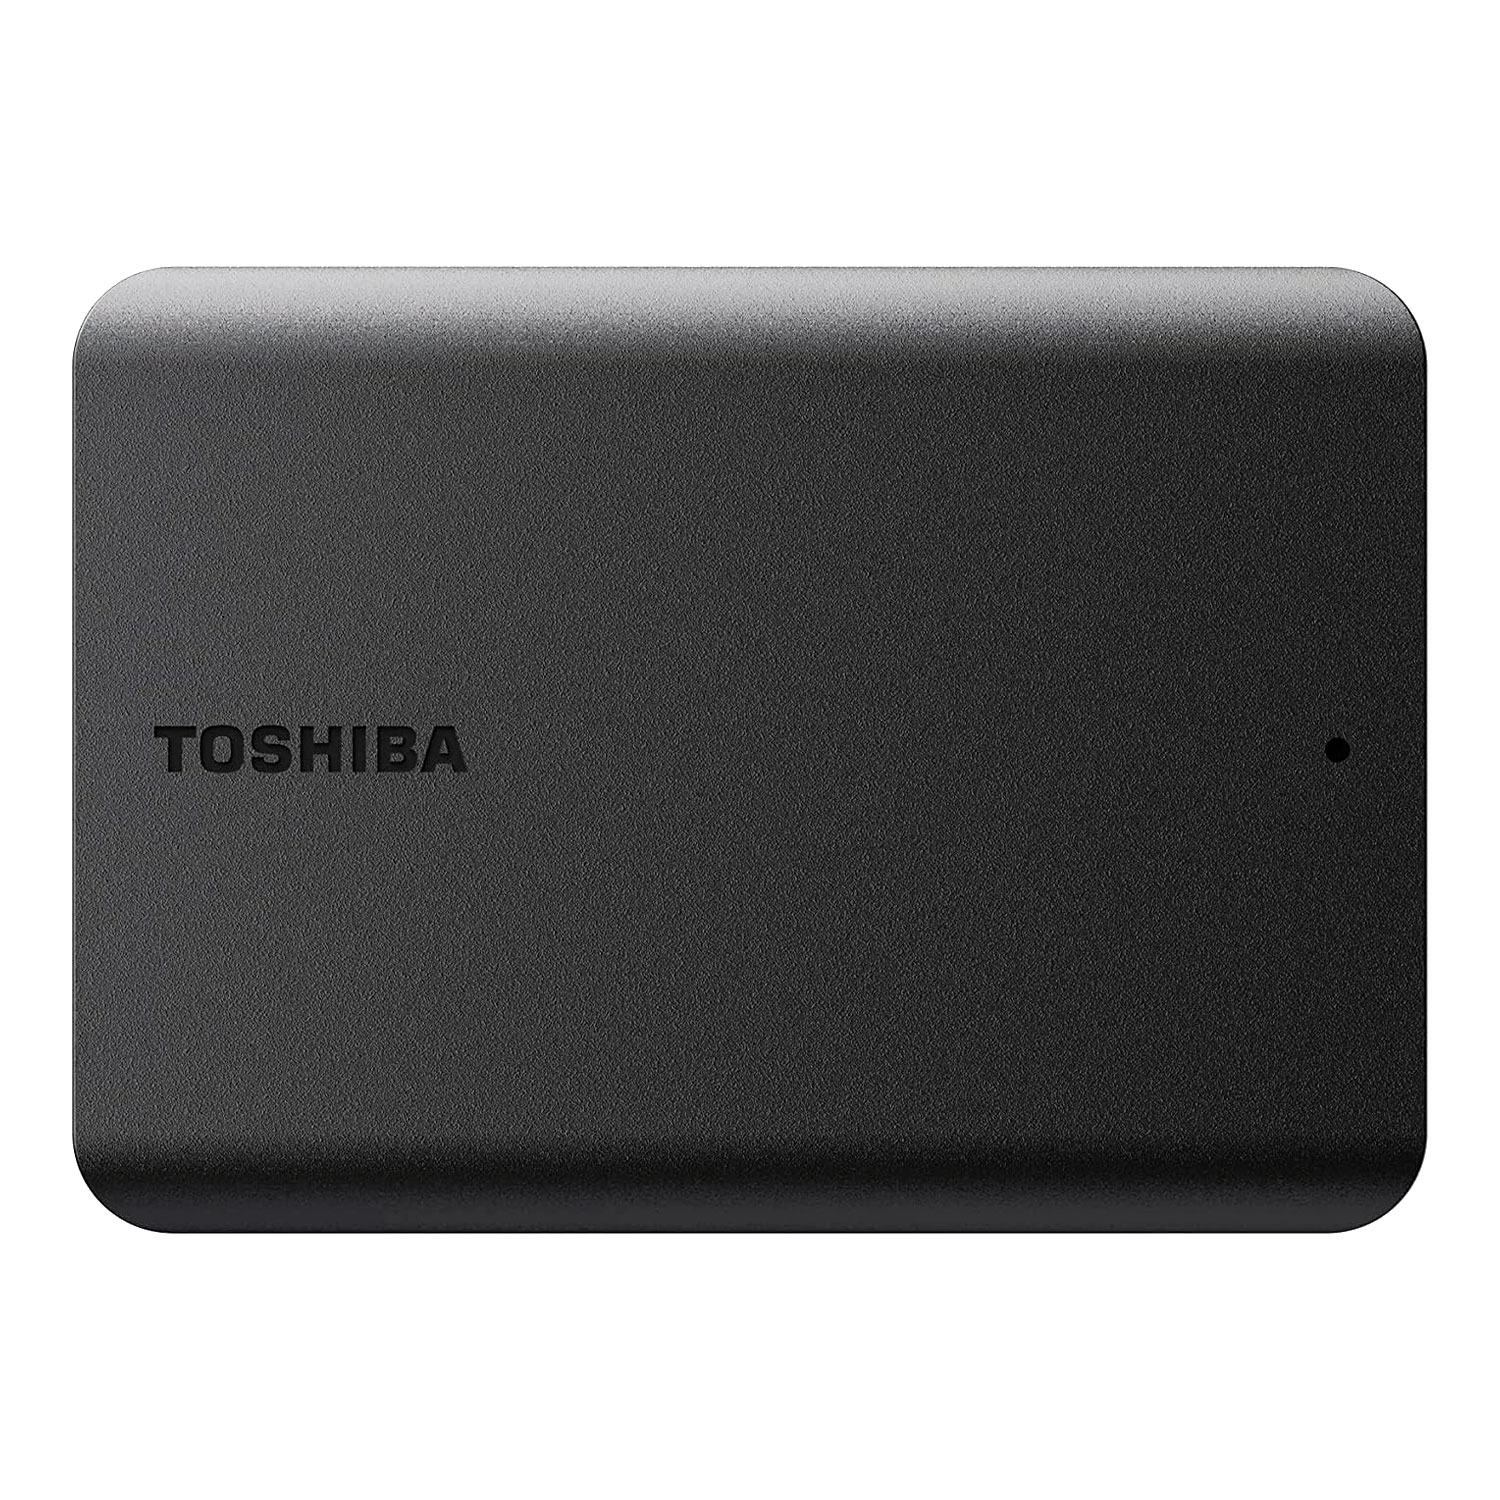 HD Externo Toshiba Canvio Basics 2TB / USB 3.2 - Preto (HDTB520XK3AA)
